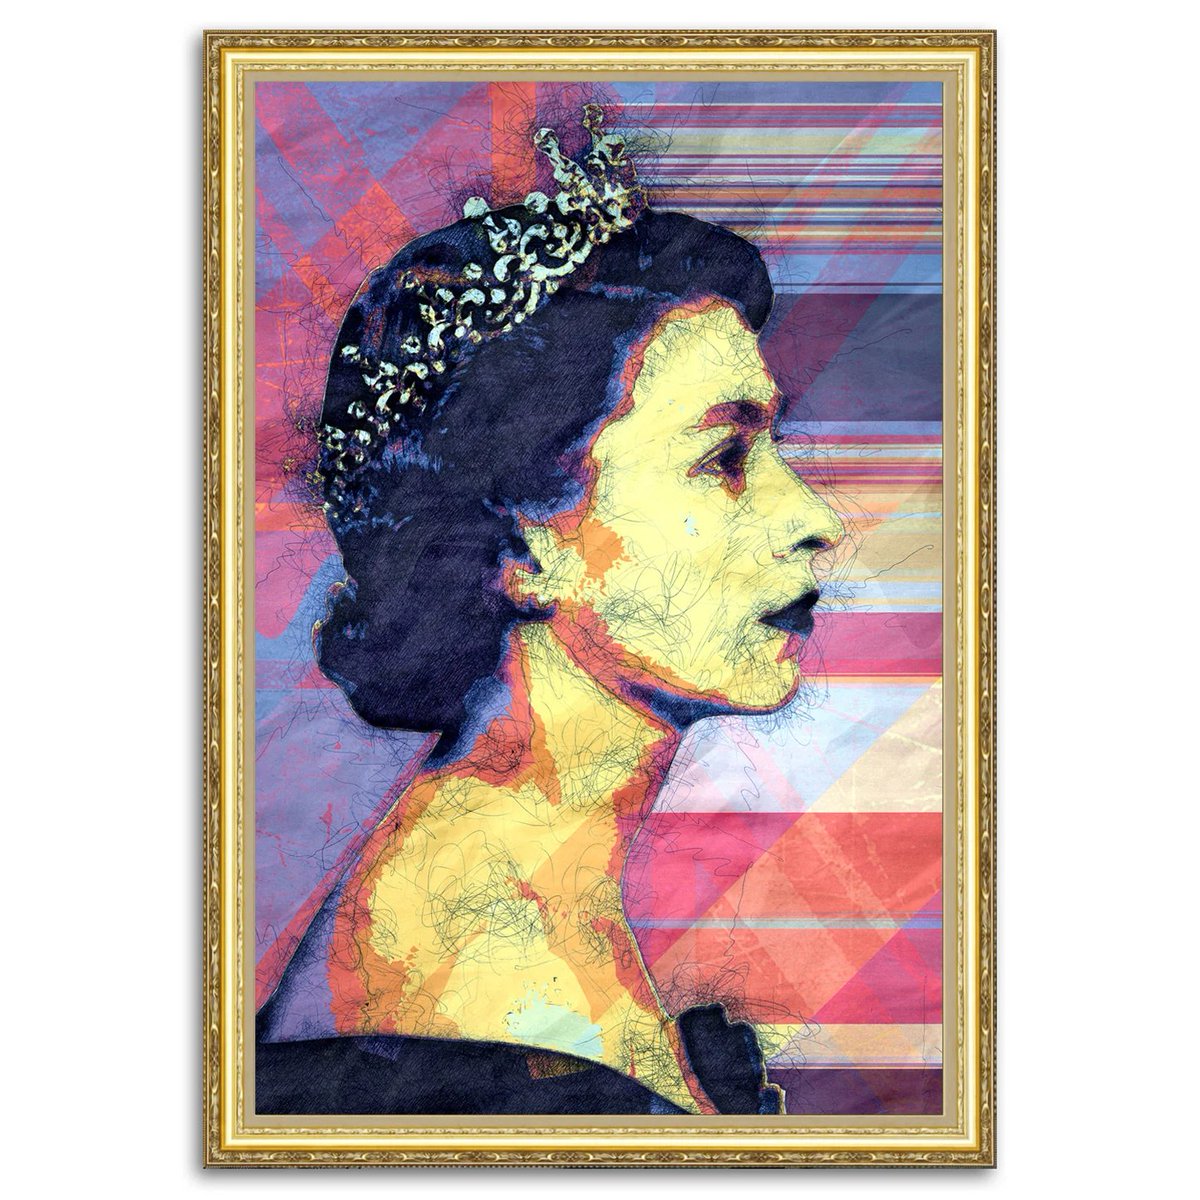 “Queen Elizabeth II - Pop Art Modern Poster Stylized Art no. 1” artcursor.com/products/queen… 
#discountalert #discountedprice #giftshopping #inspiringbeauty #artworkinspiration #artworkappreciation #inspiringhearts #artworklove #artworkshop #salealert